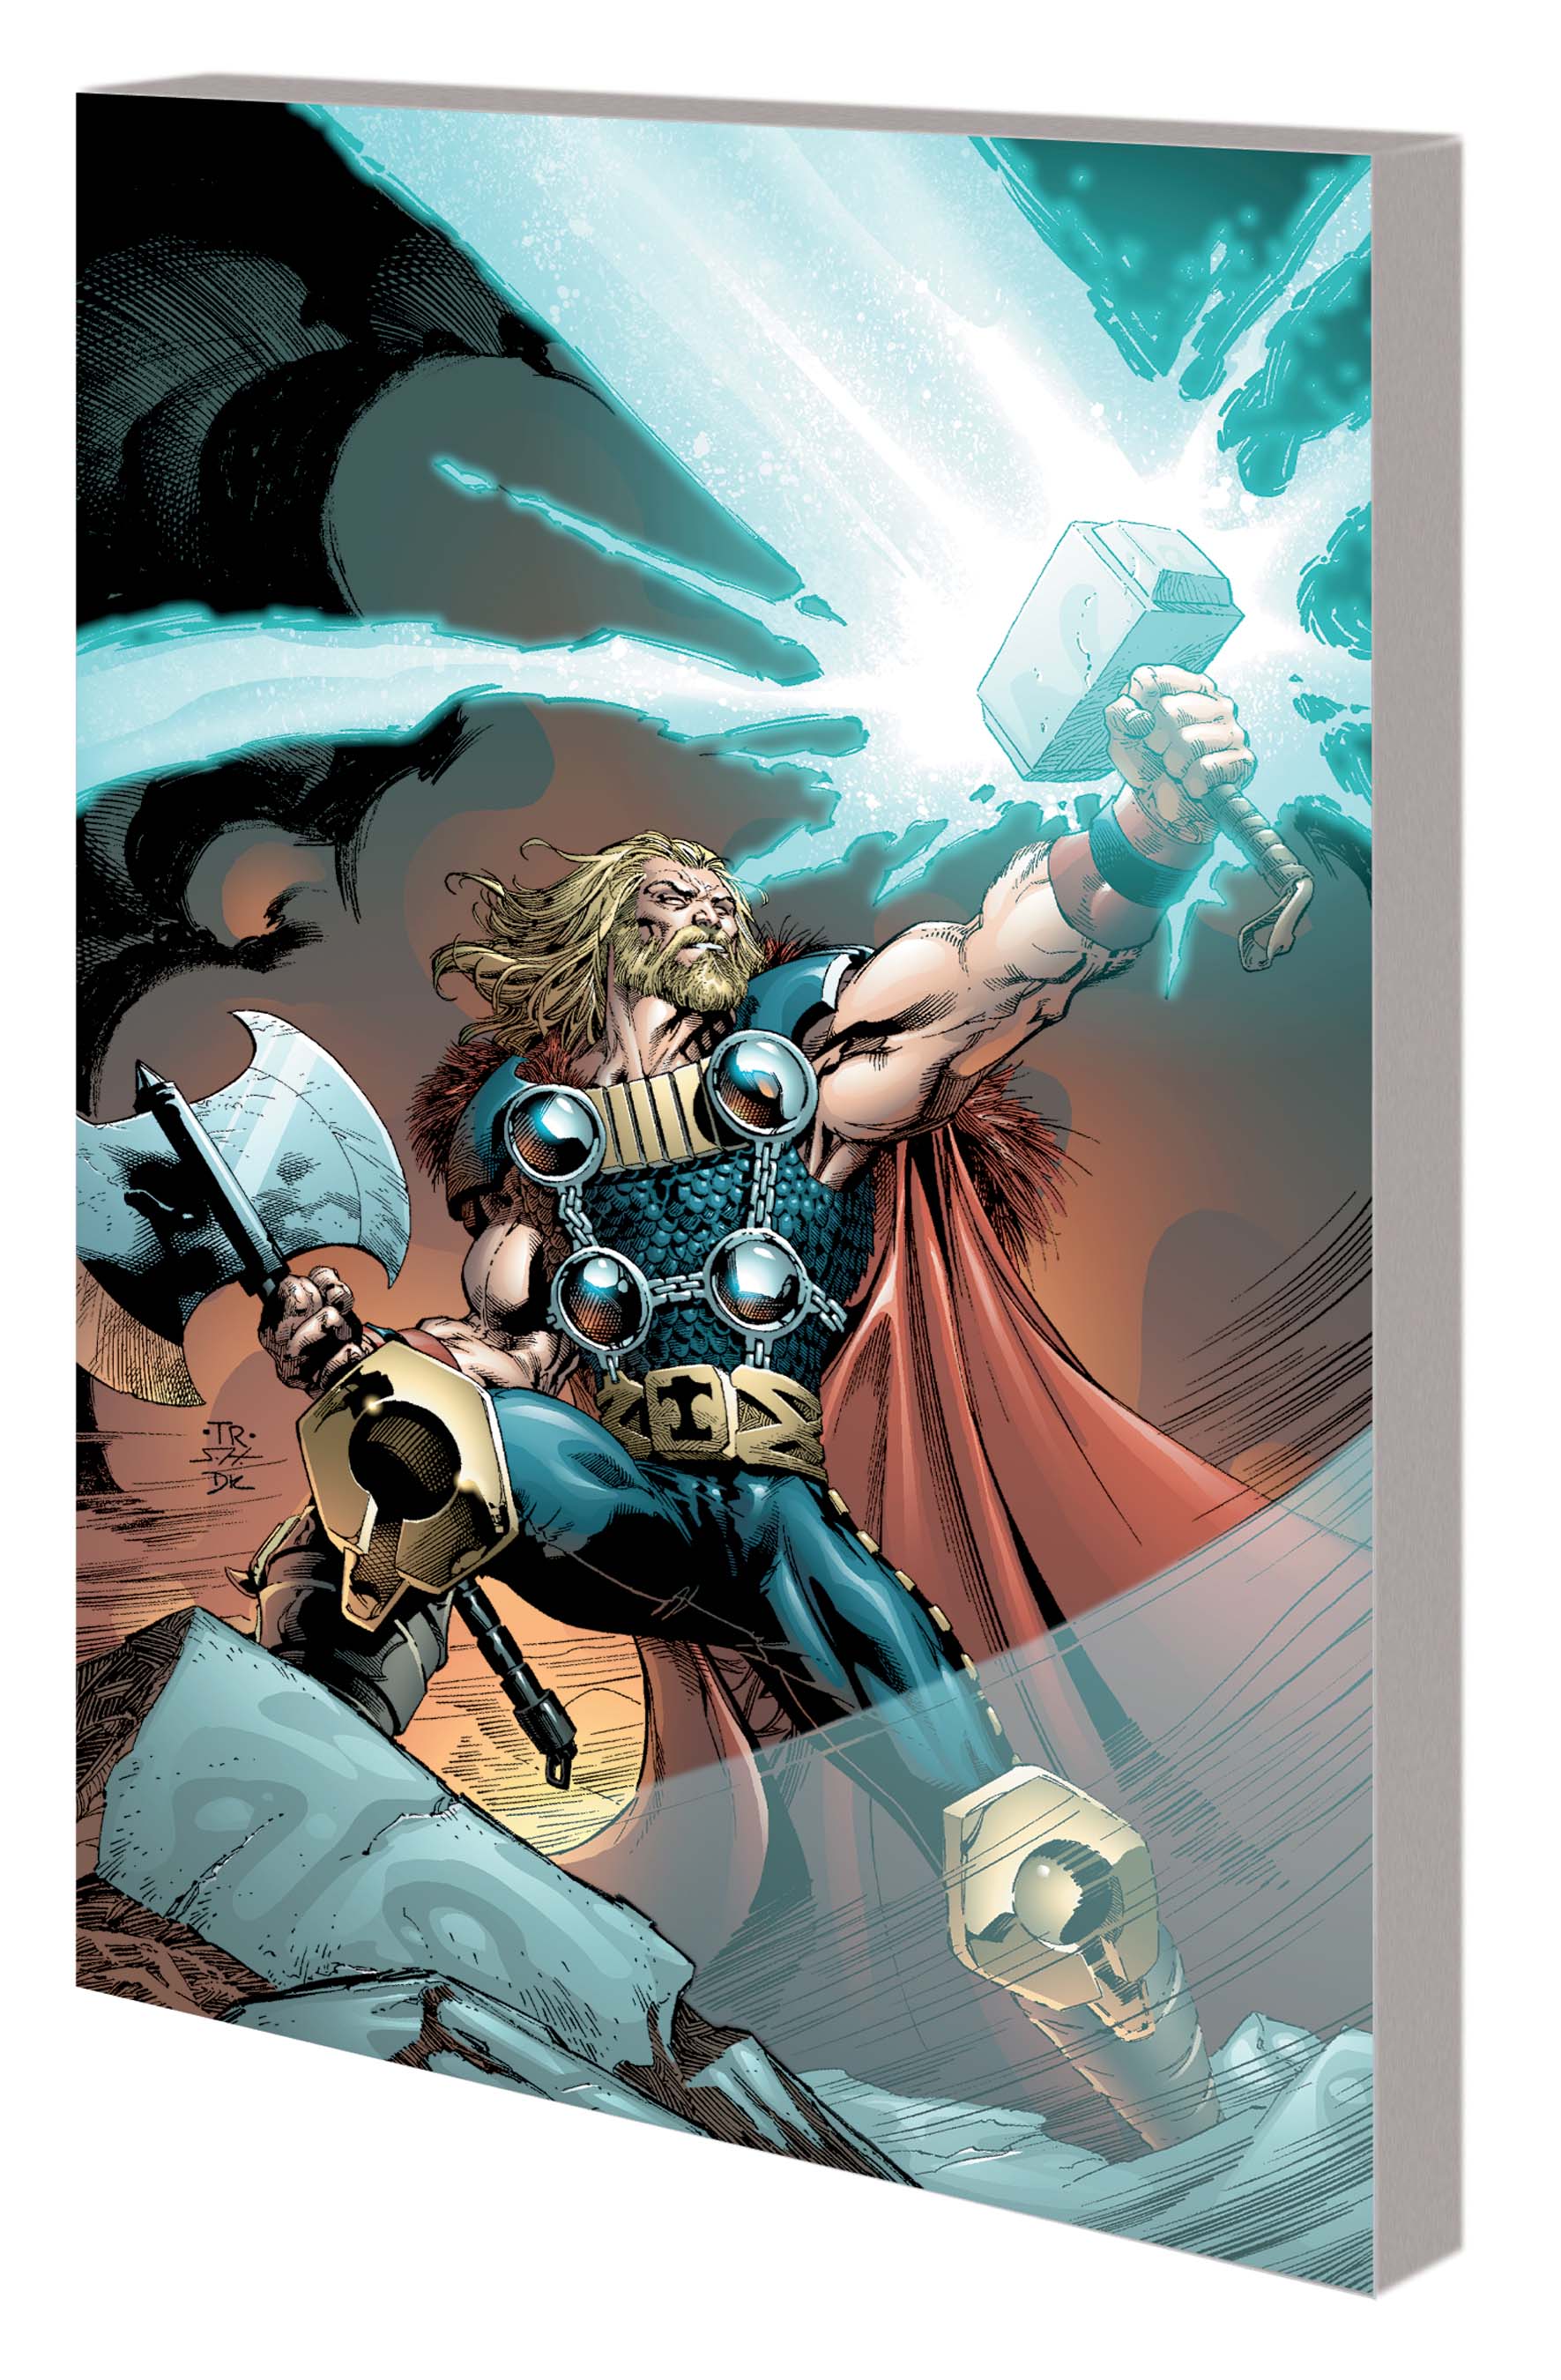 thor for asgard comics